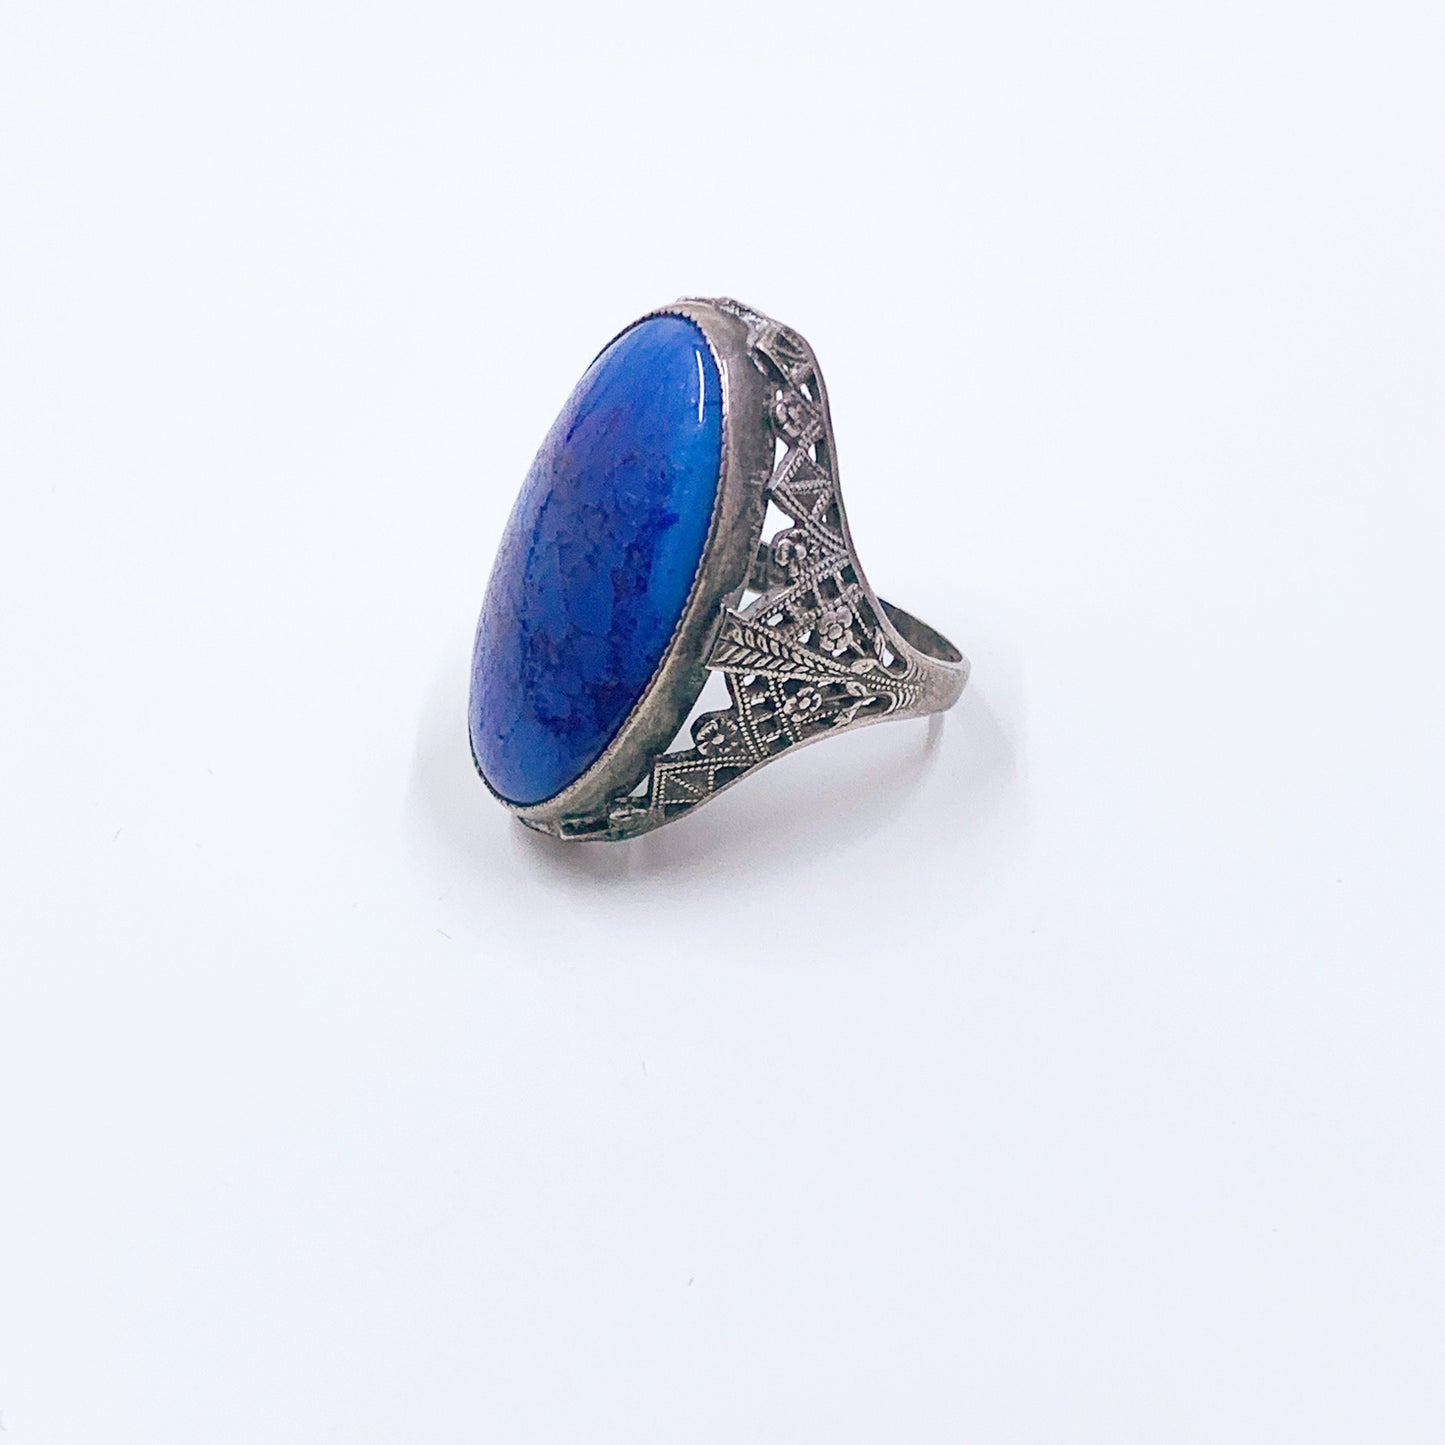 Antique Art Deco Blue Glass Stone Filigree Ring | Art Deco Filigree Sterling Silver Ring | Size 4 1/2 Ring